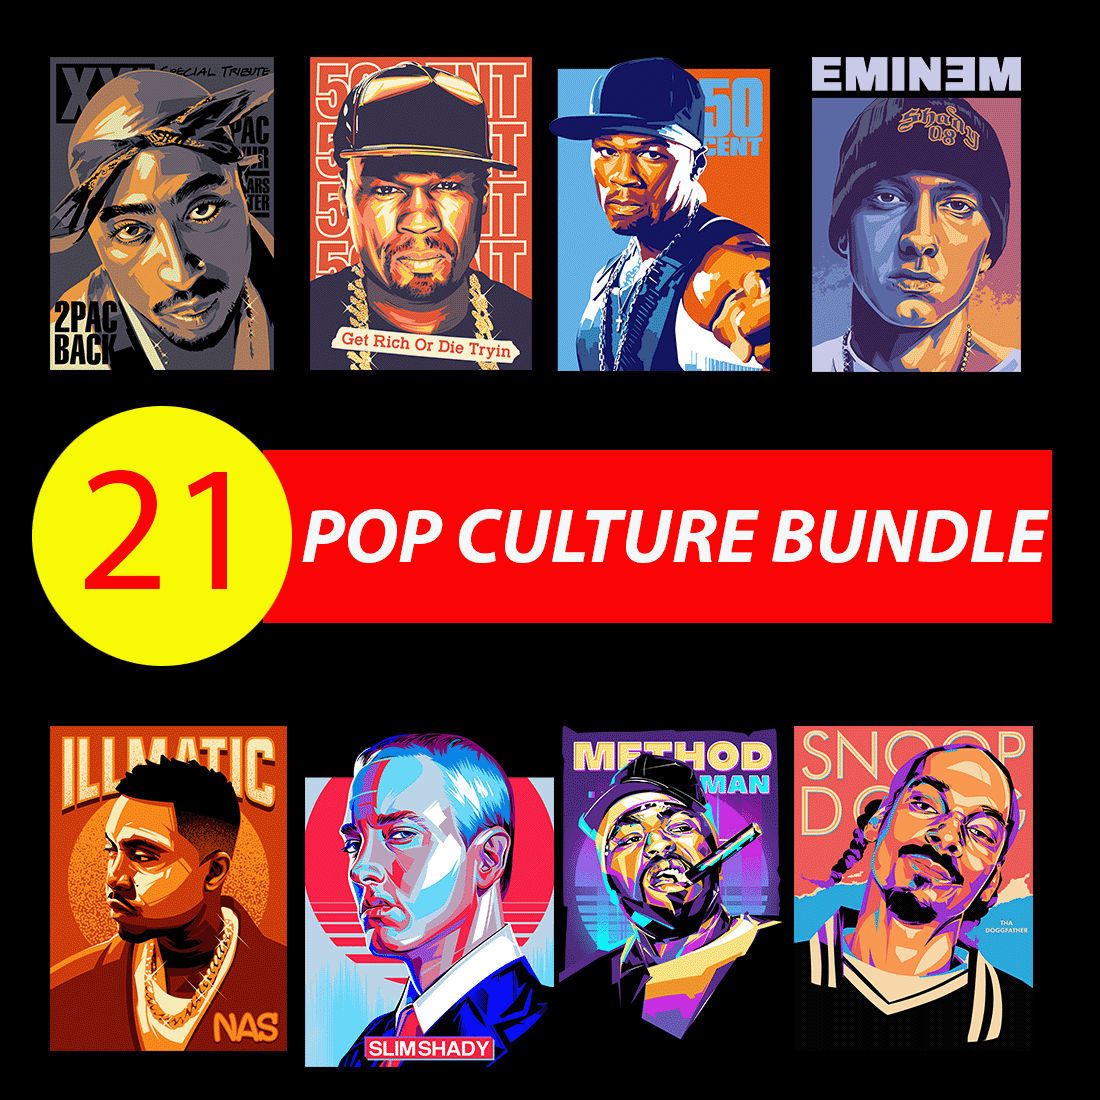 Pop culture bundle 21 pop culture bundle.